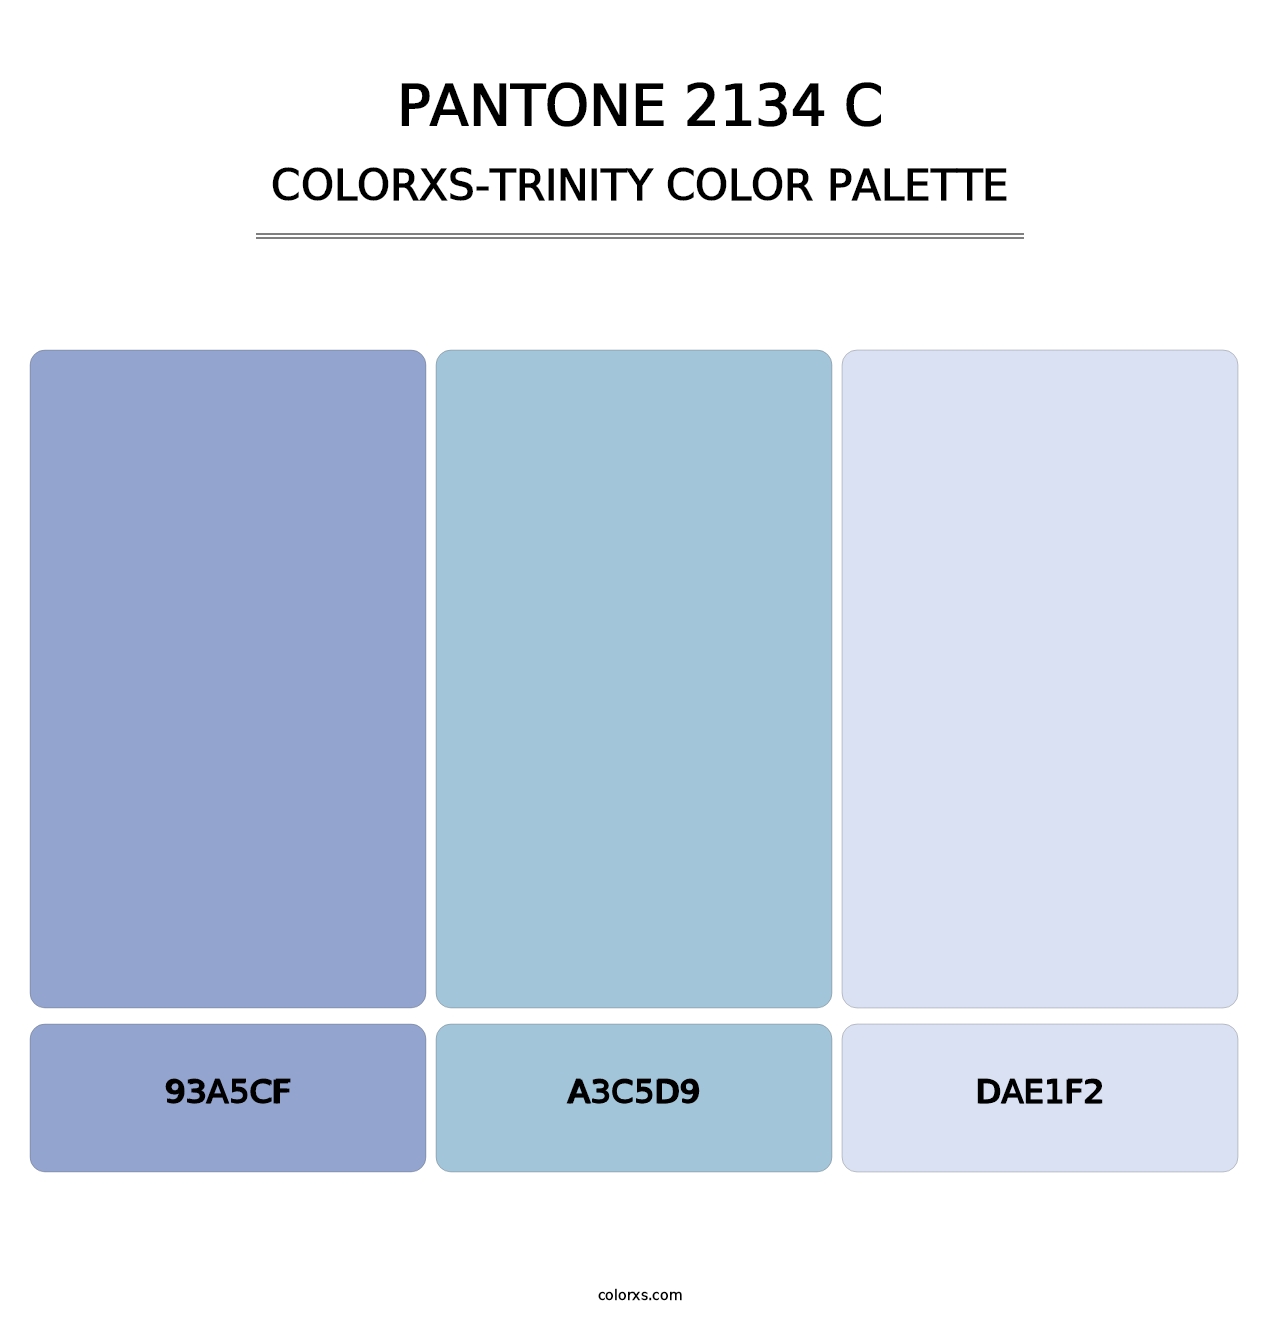 PANTONE 2134 C - Colorxs Trinity Palette